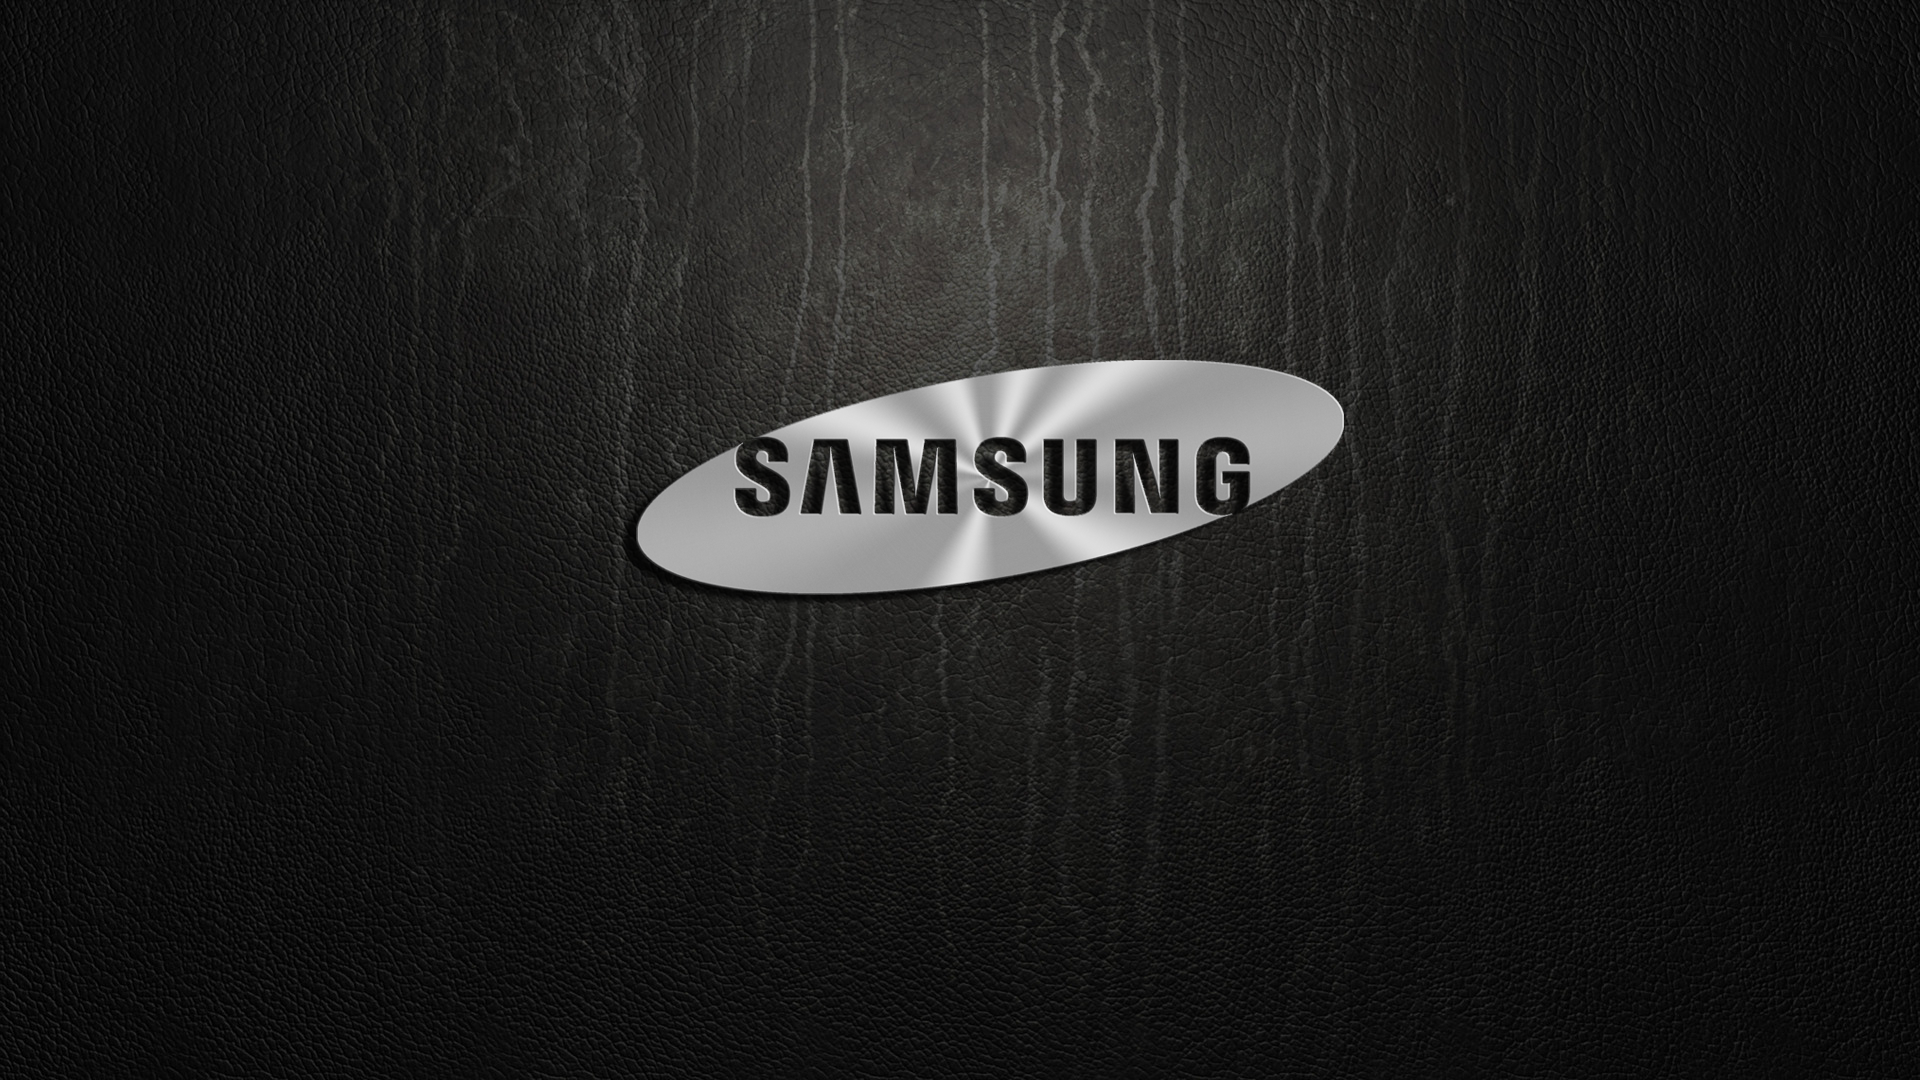 Samsung HD Wallpaper | Background Image | 1920x1080 | ID ...